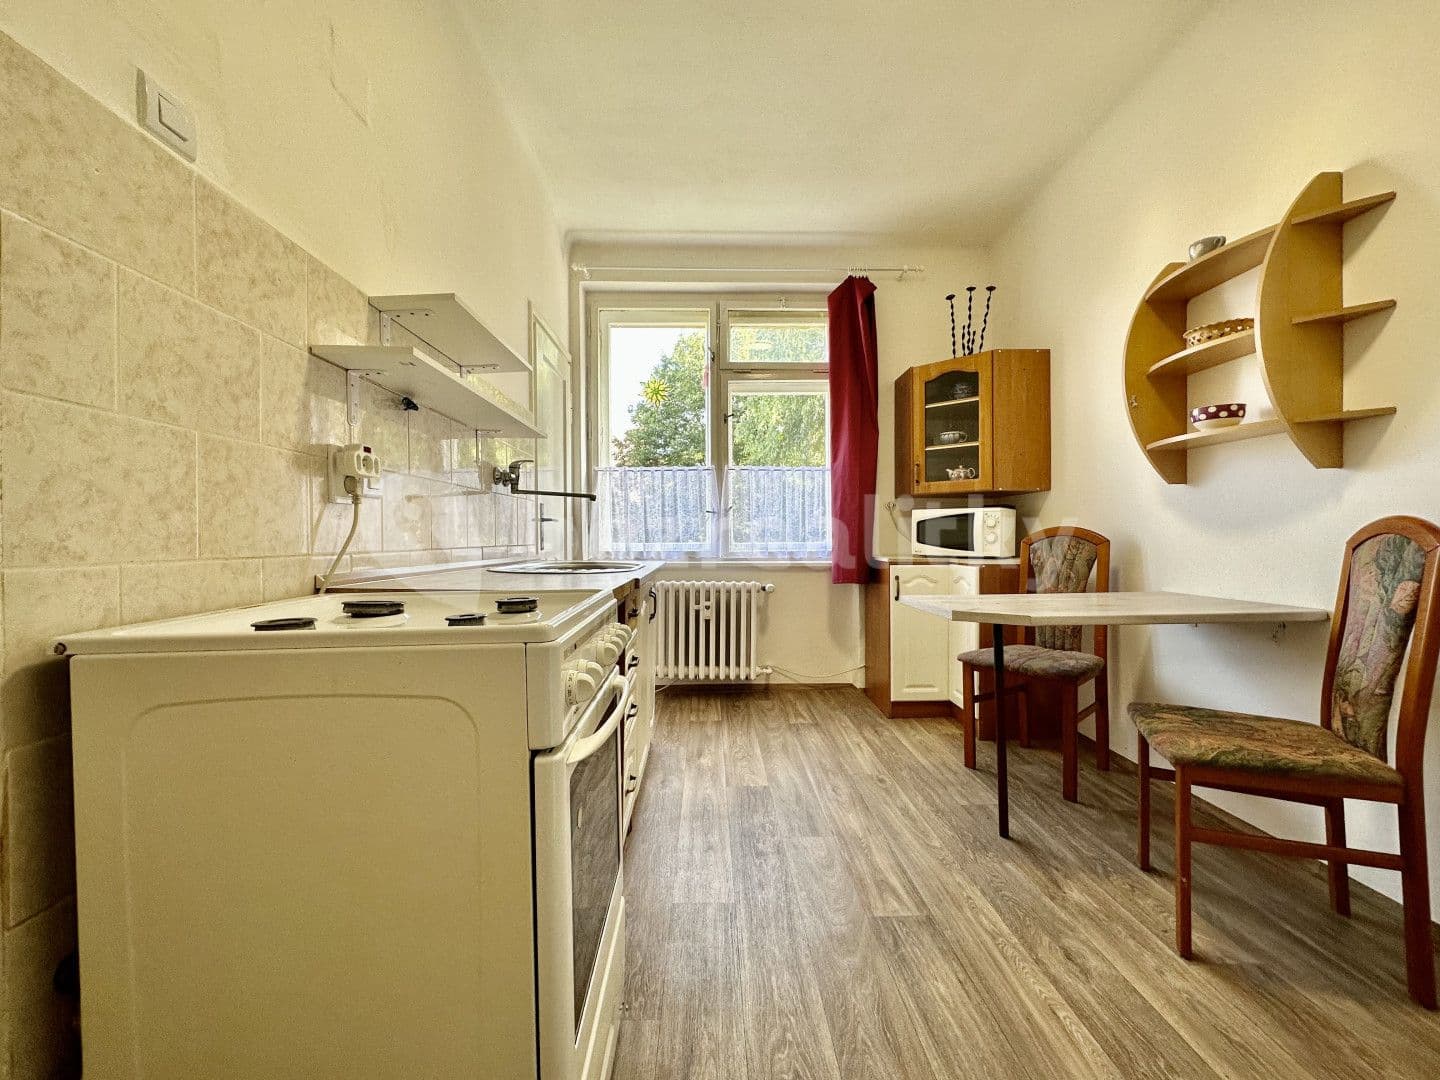 3 bedroom flat for sale, 80 m², Masarykova, Klatovy, Plzeňský Region